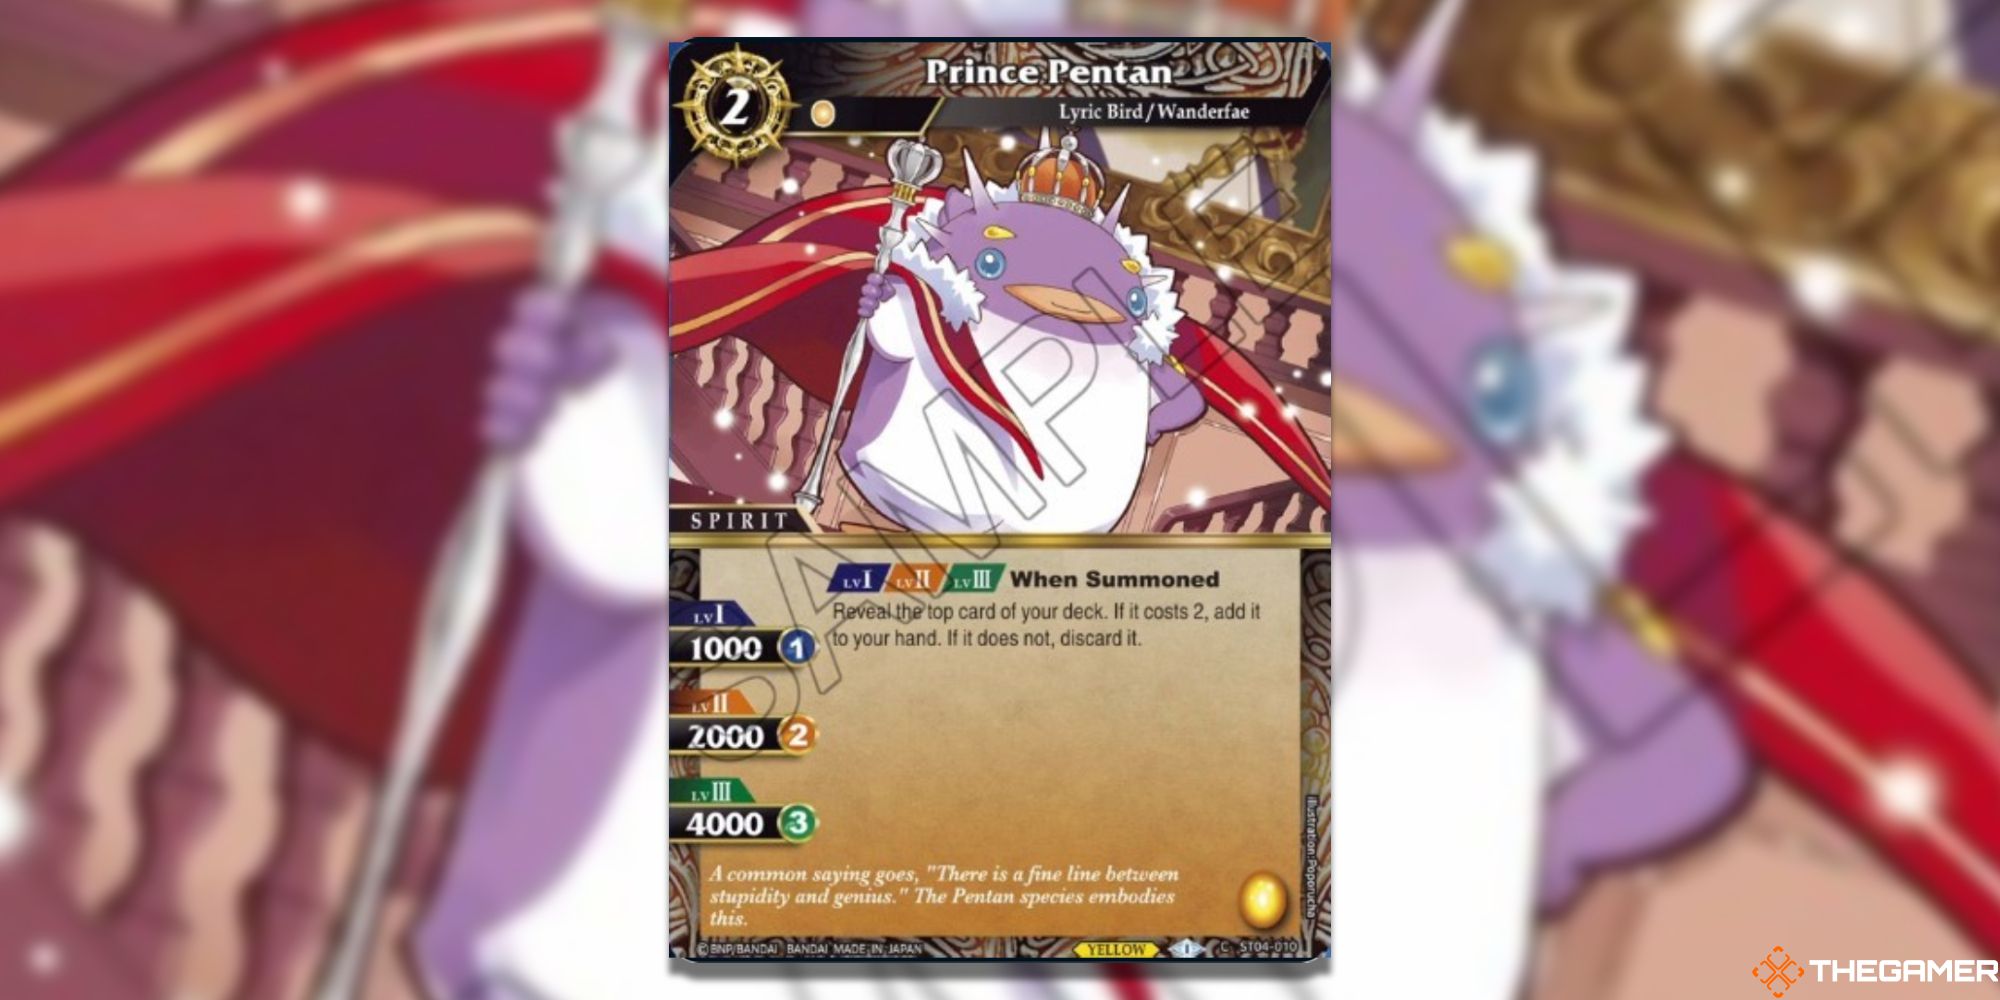 Prince Pentan Card from Battle Spirits Saga